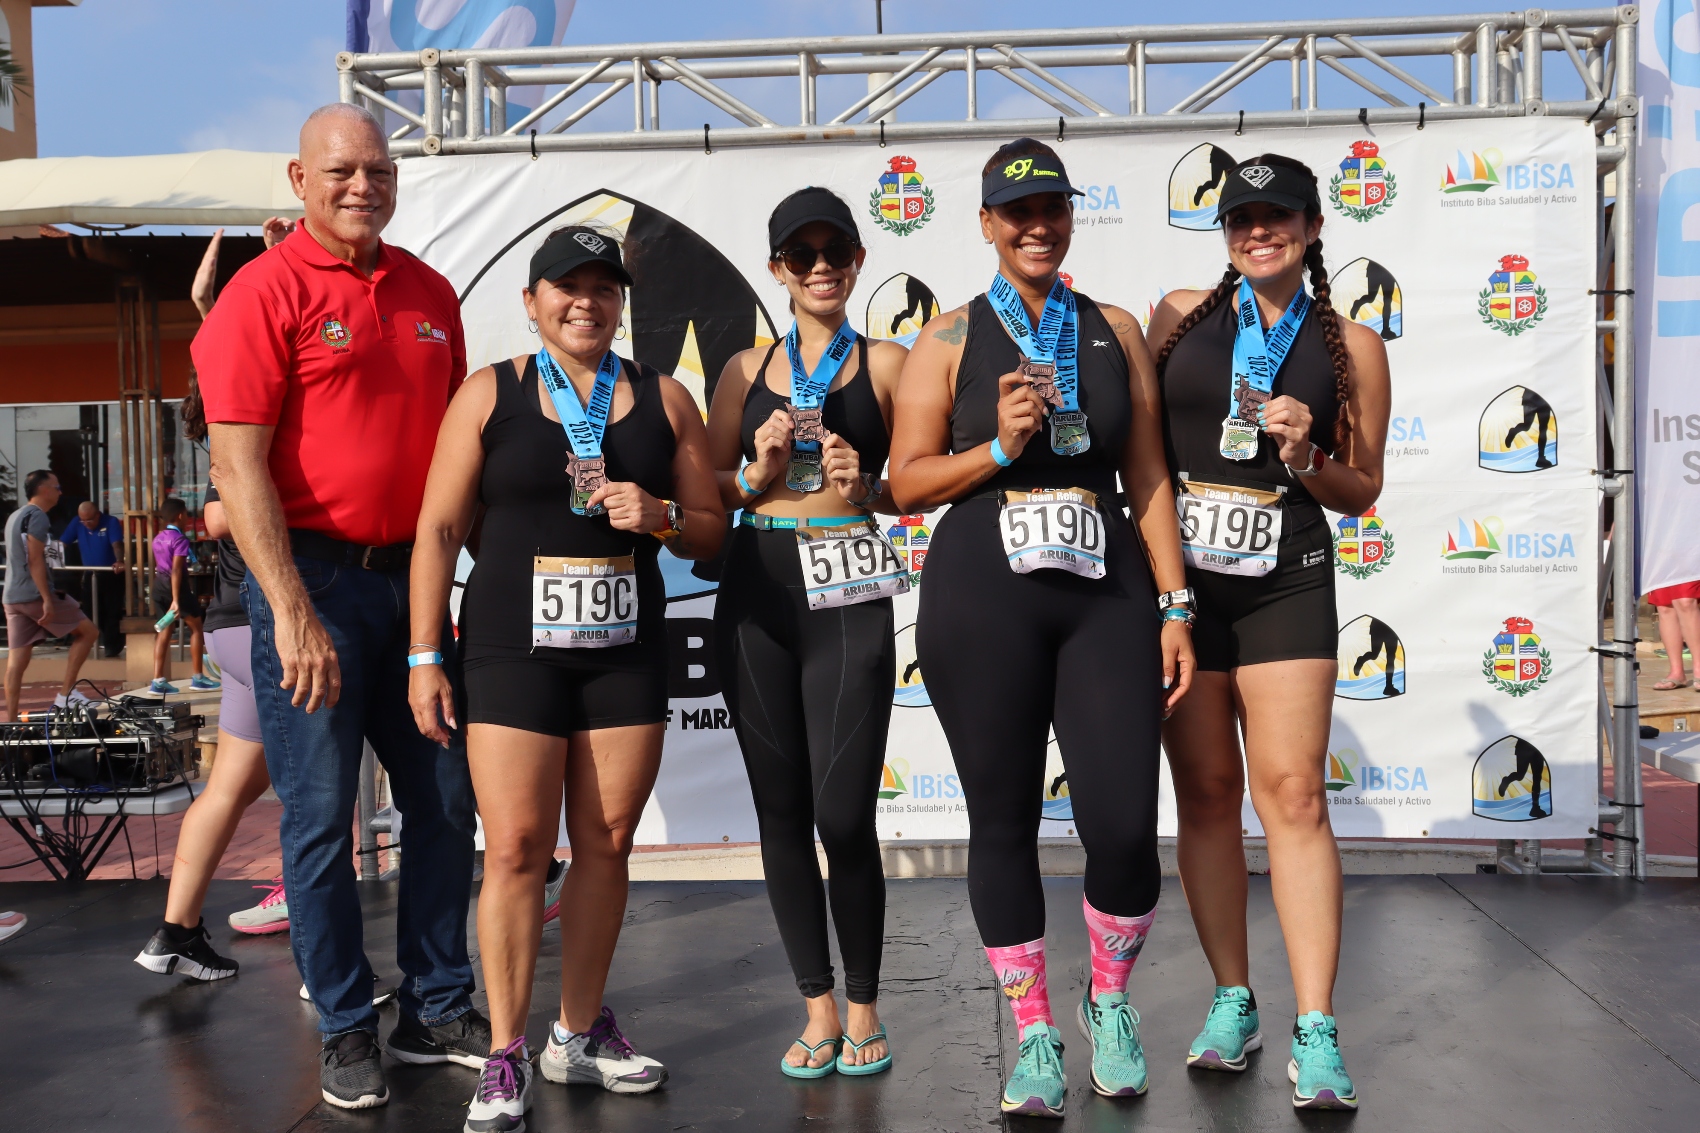 Alexander Hodge y Lana Gobert ganadornan absoluto di 38 'Aruba International Half Marathon'